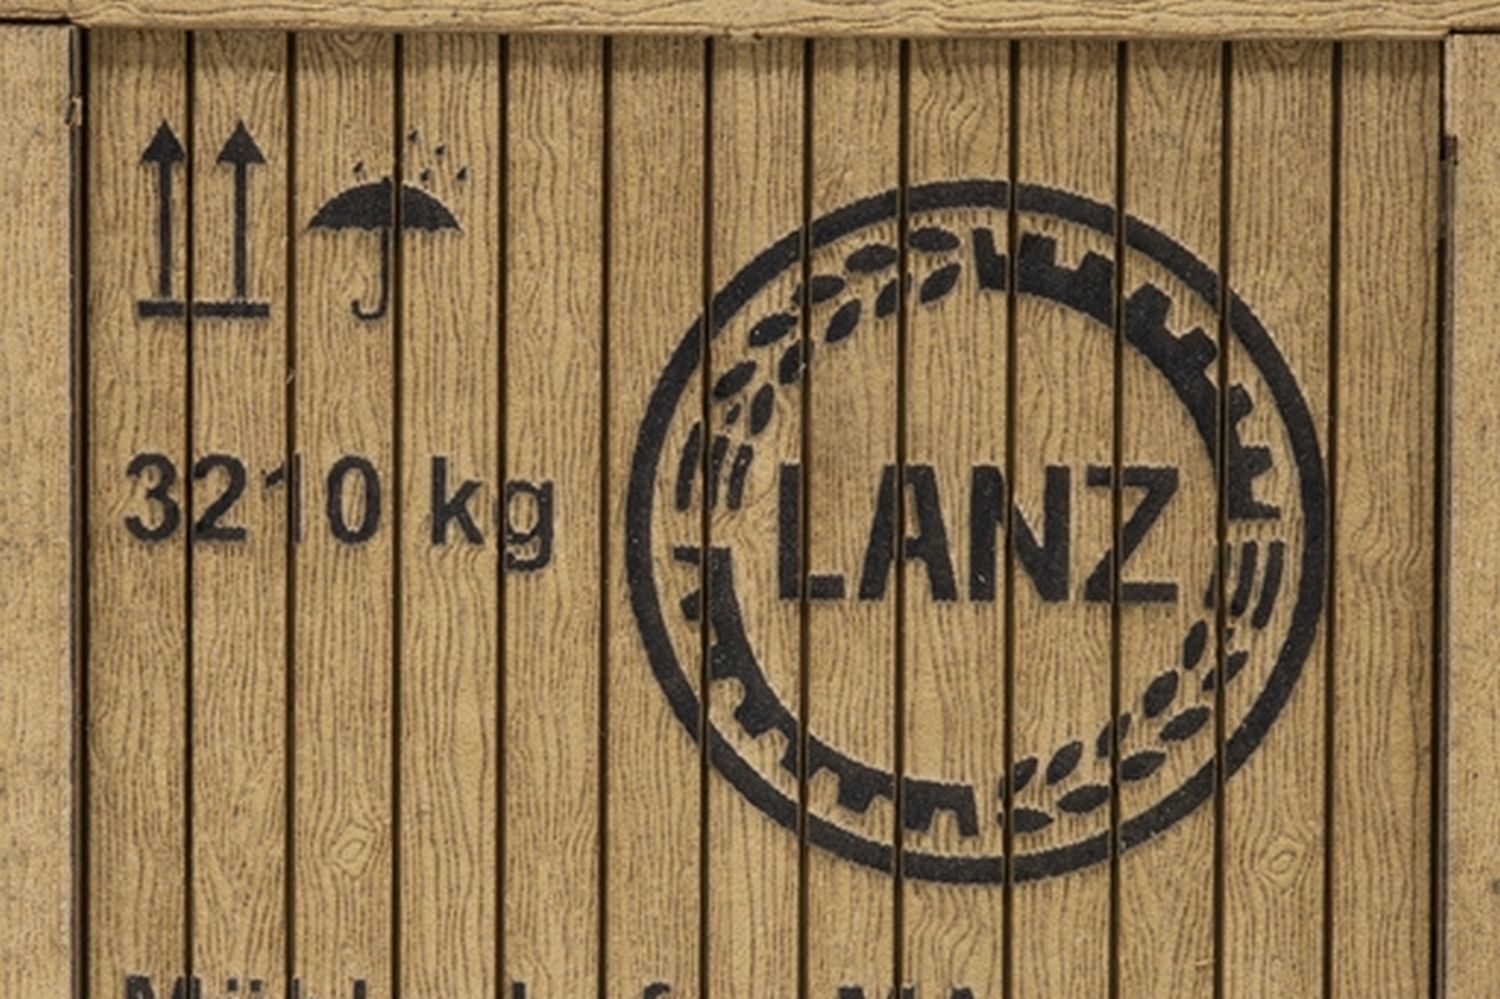 Joswood 70211 - mittlere Kiste mit Rahmen 'Lanz', 1 Stück, 126 x 60 x 60 mm